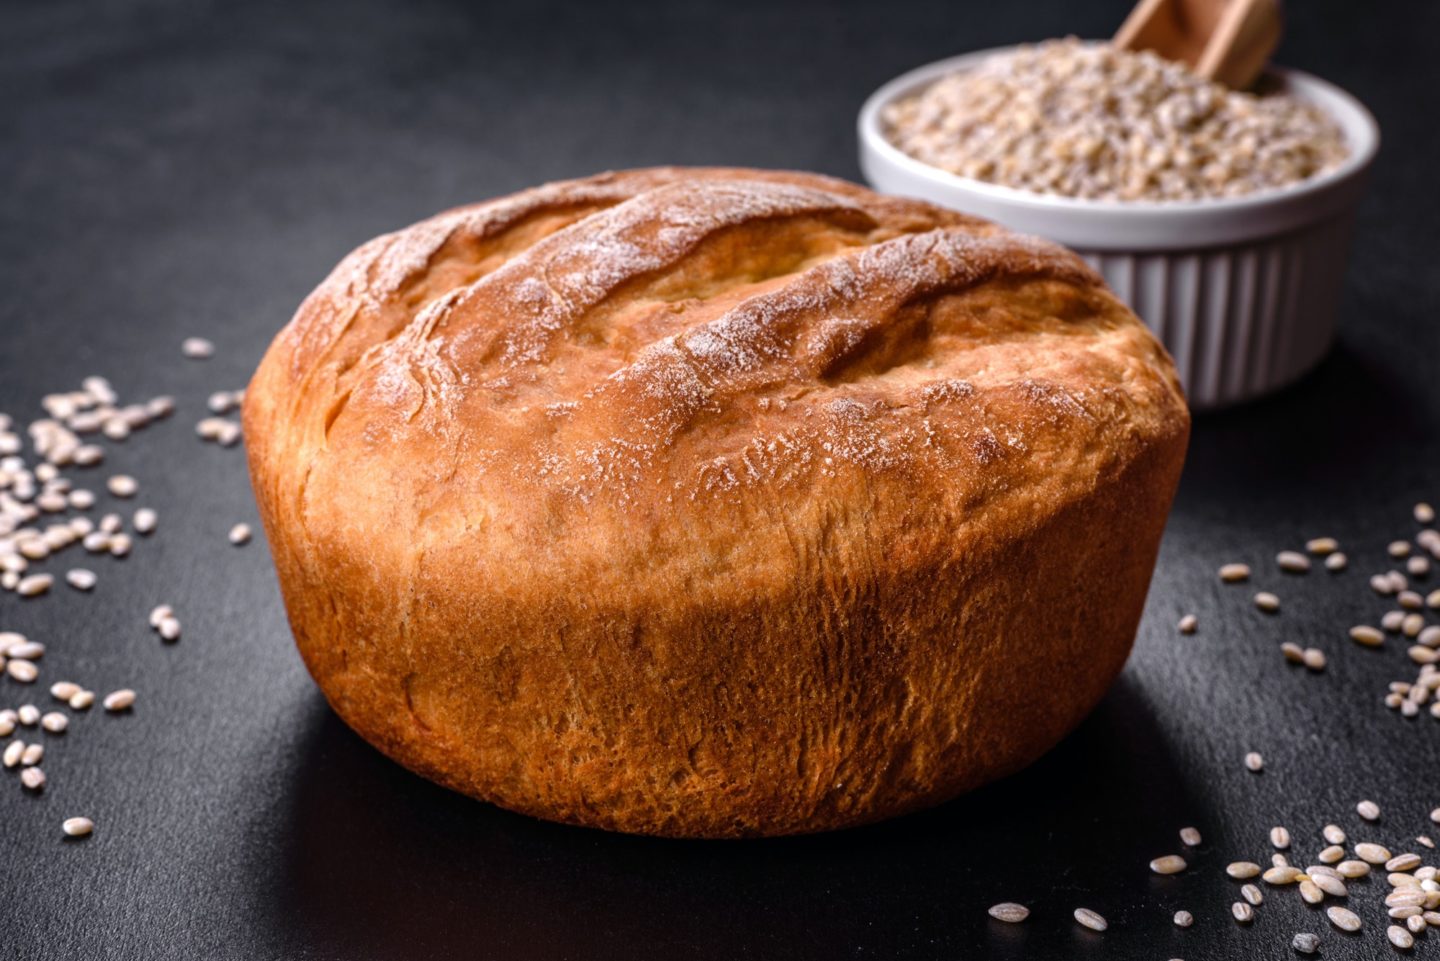 Tasty fresh baked in oven white bread on a dark concrete background